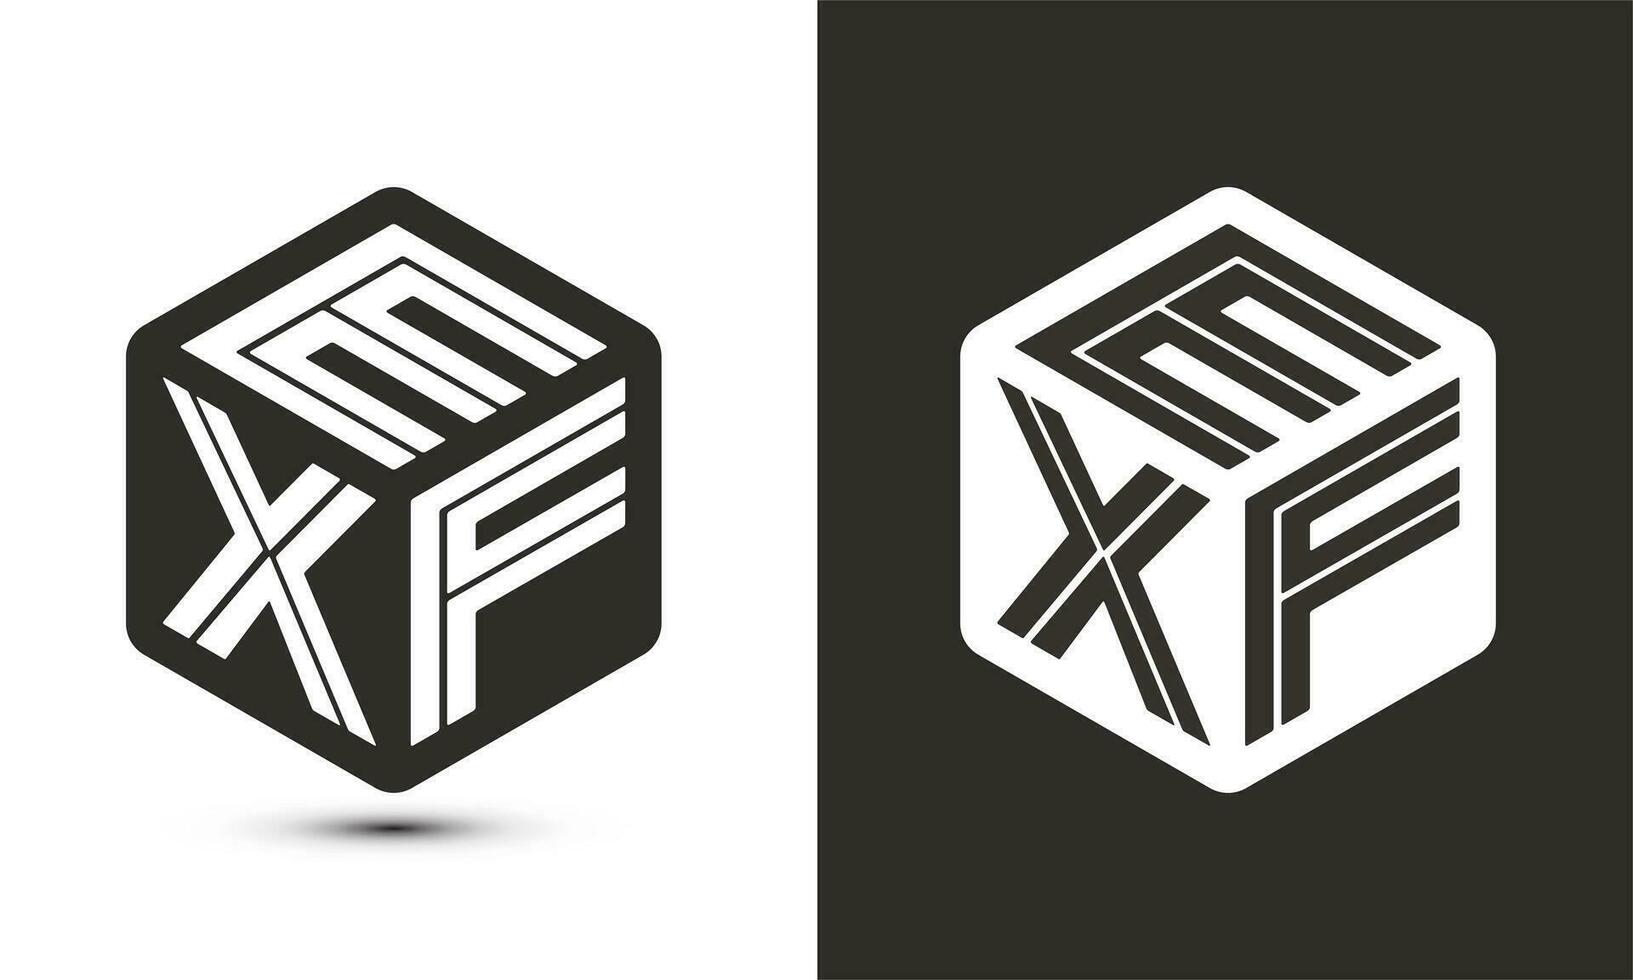 exf letra logo diseño con ilustrador cubo logo, vector logo moderno alfabeto fuente superposición estilo.